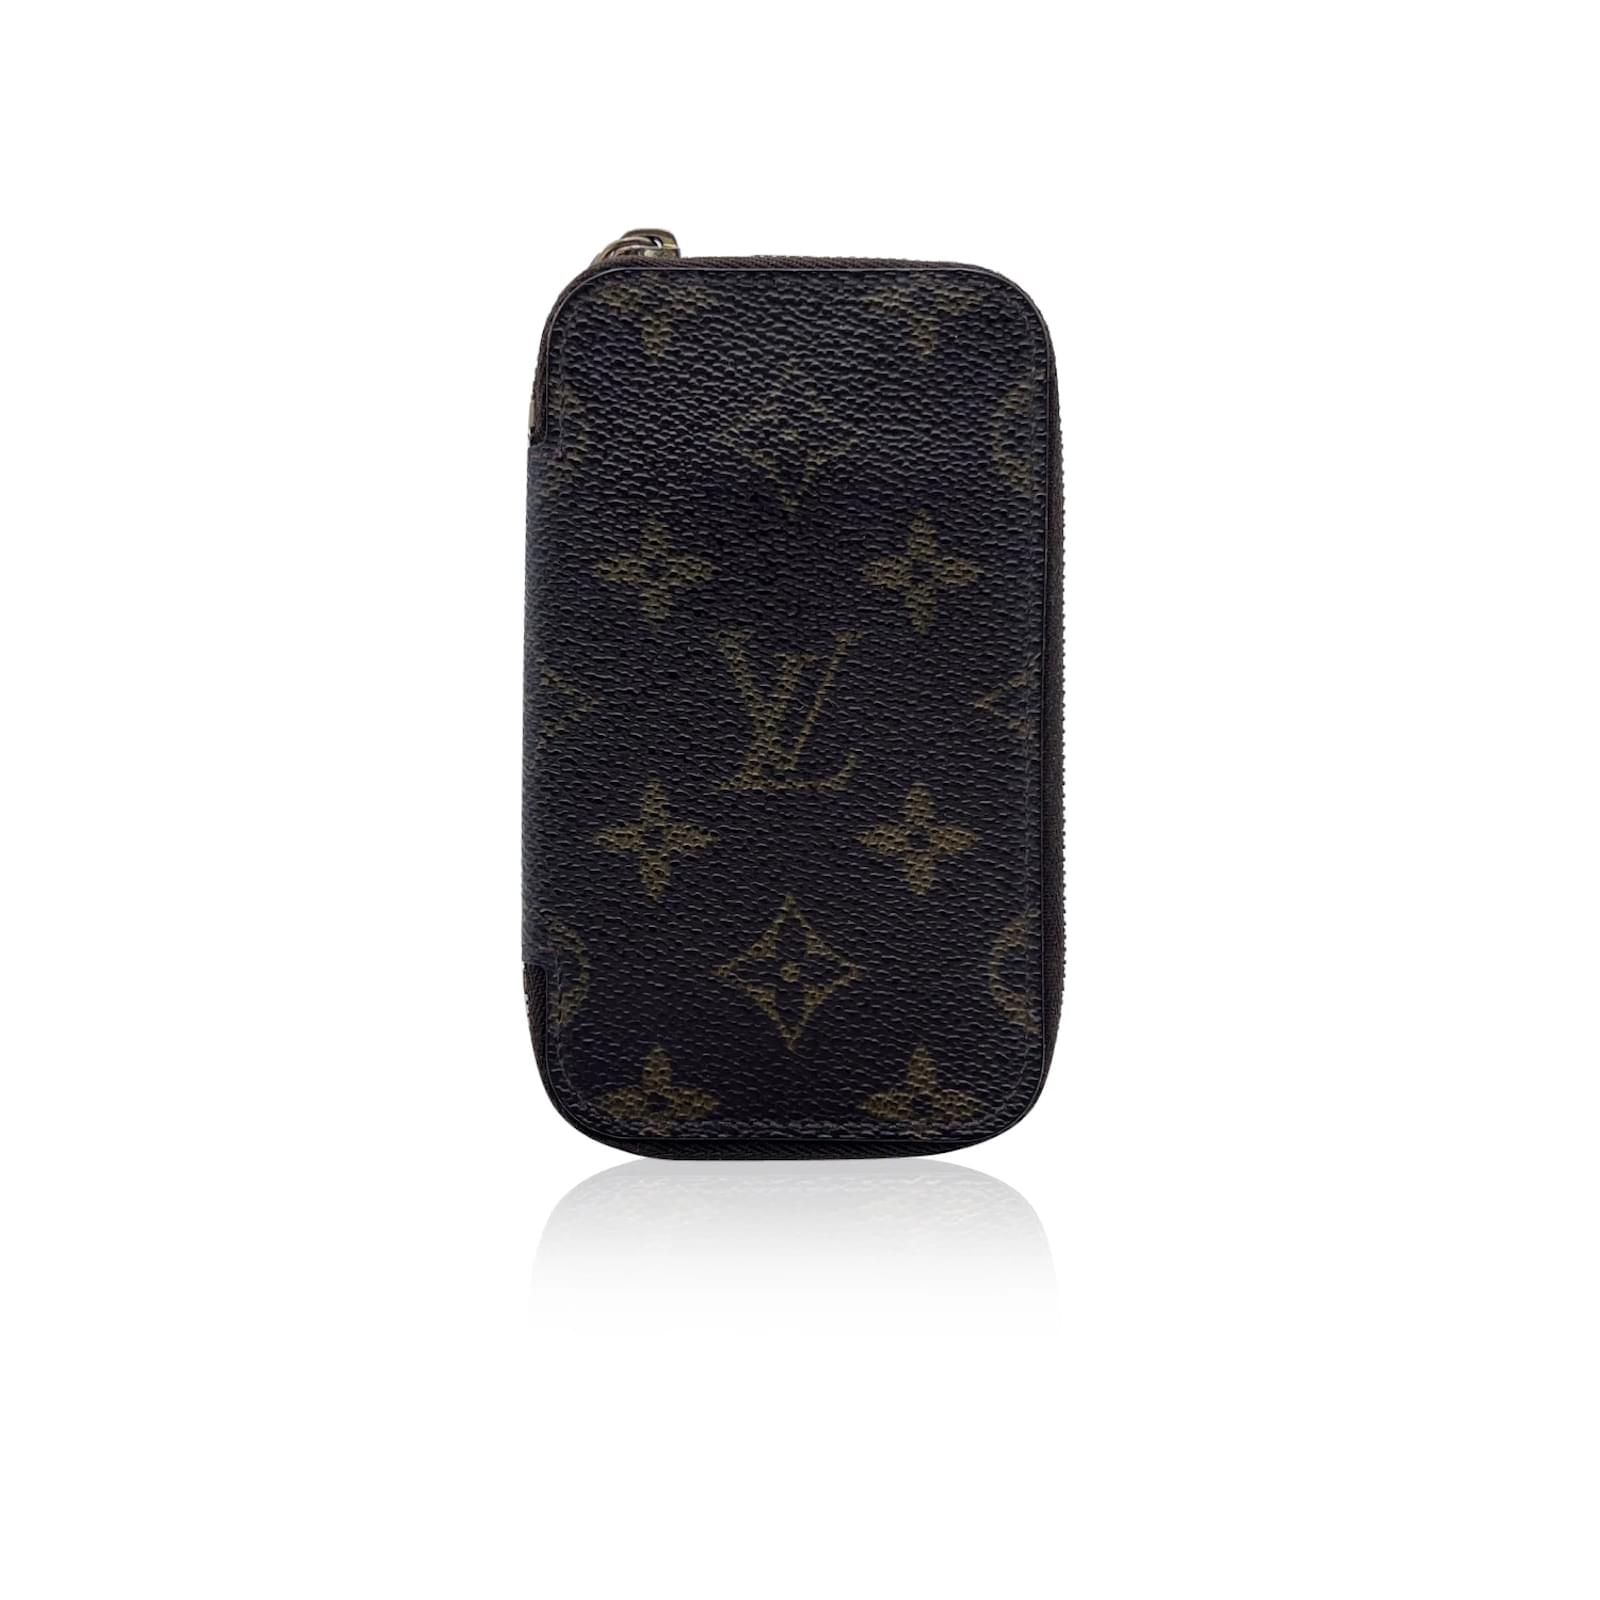 Louis Vuitton Monogram Canvas 6 Key Holder on SALE